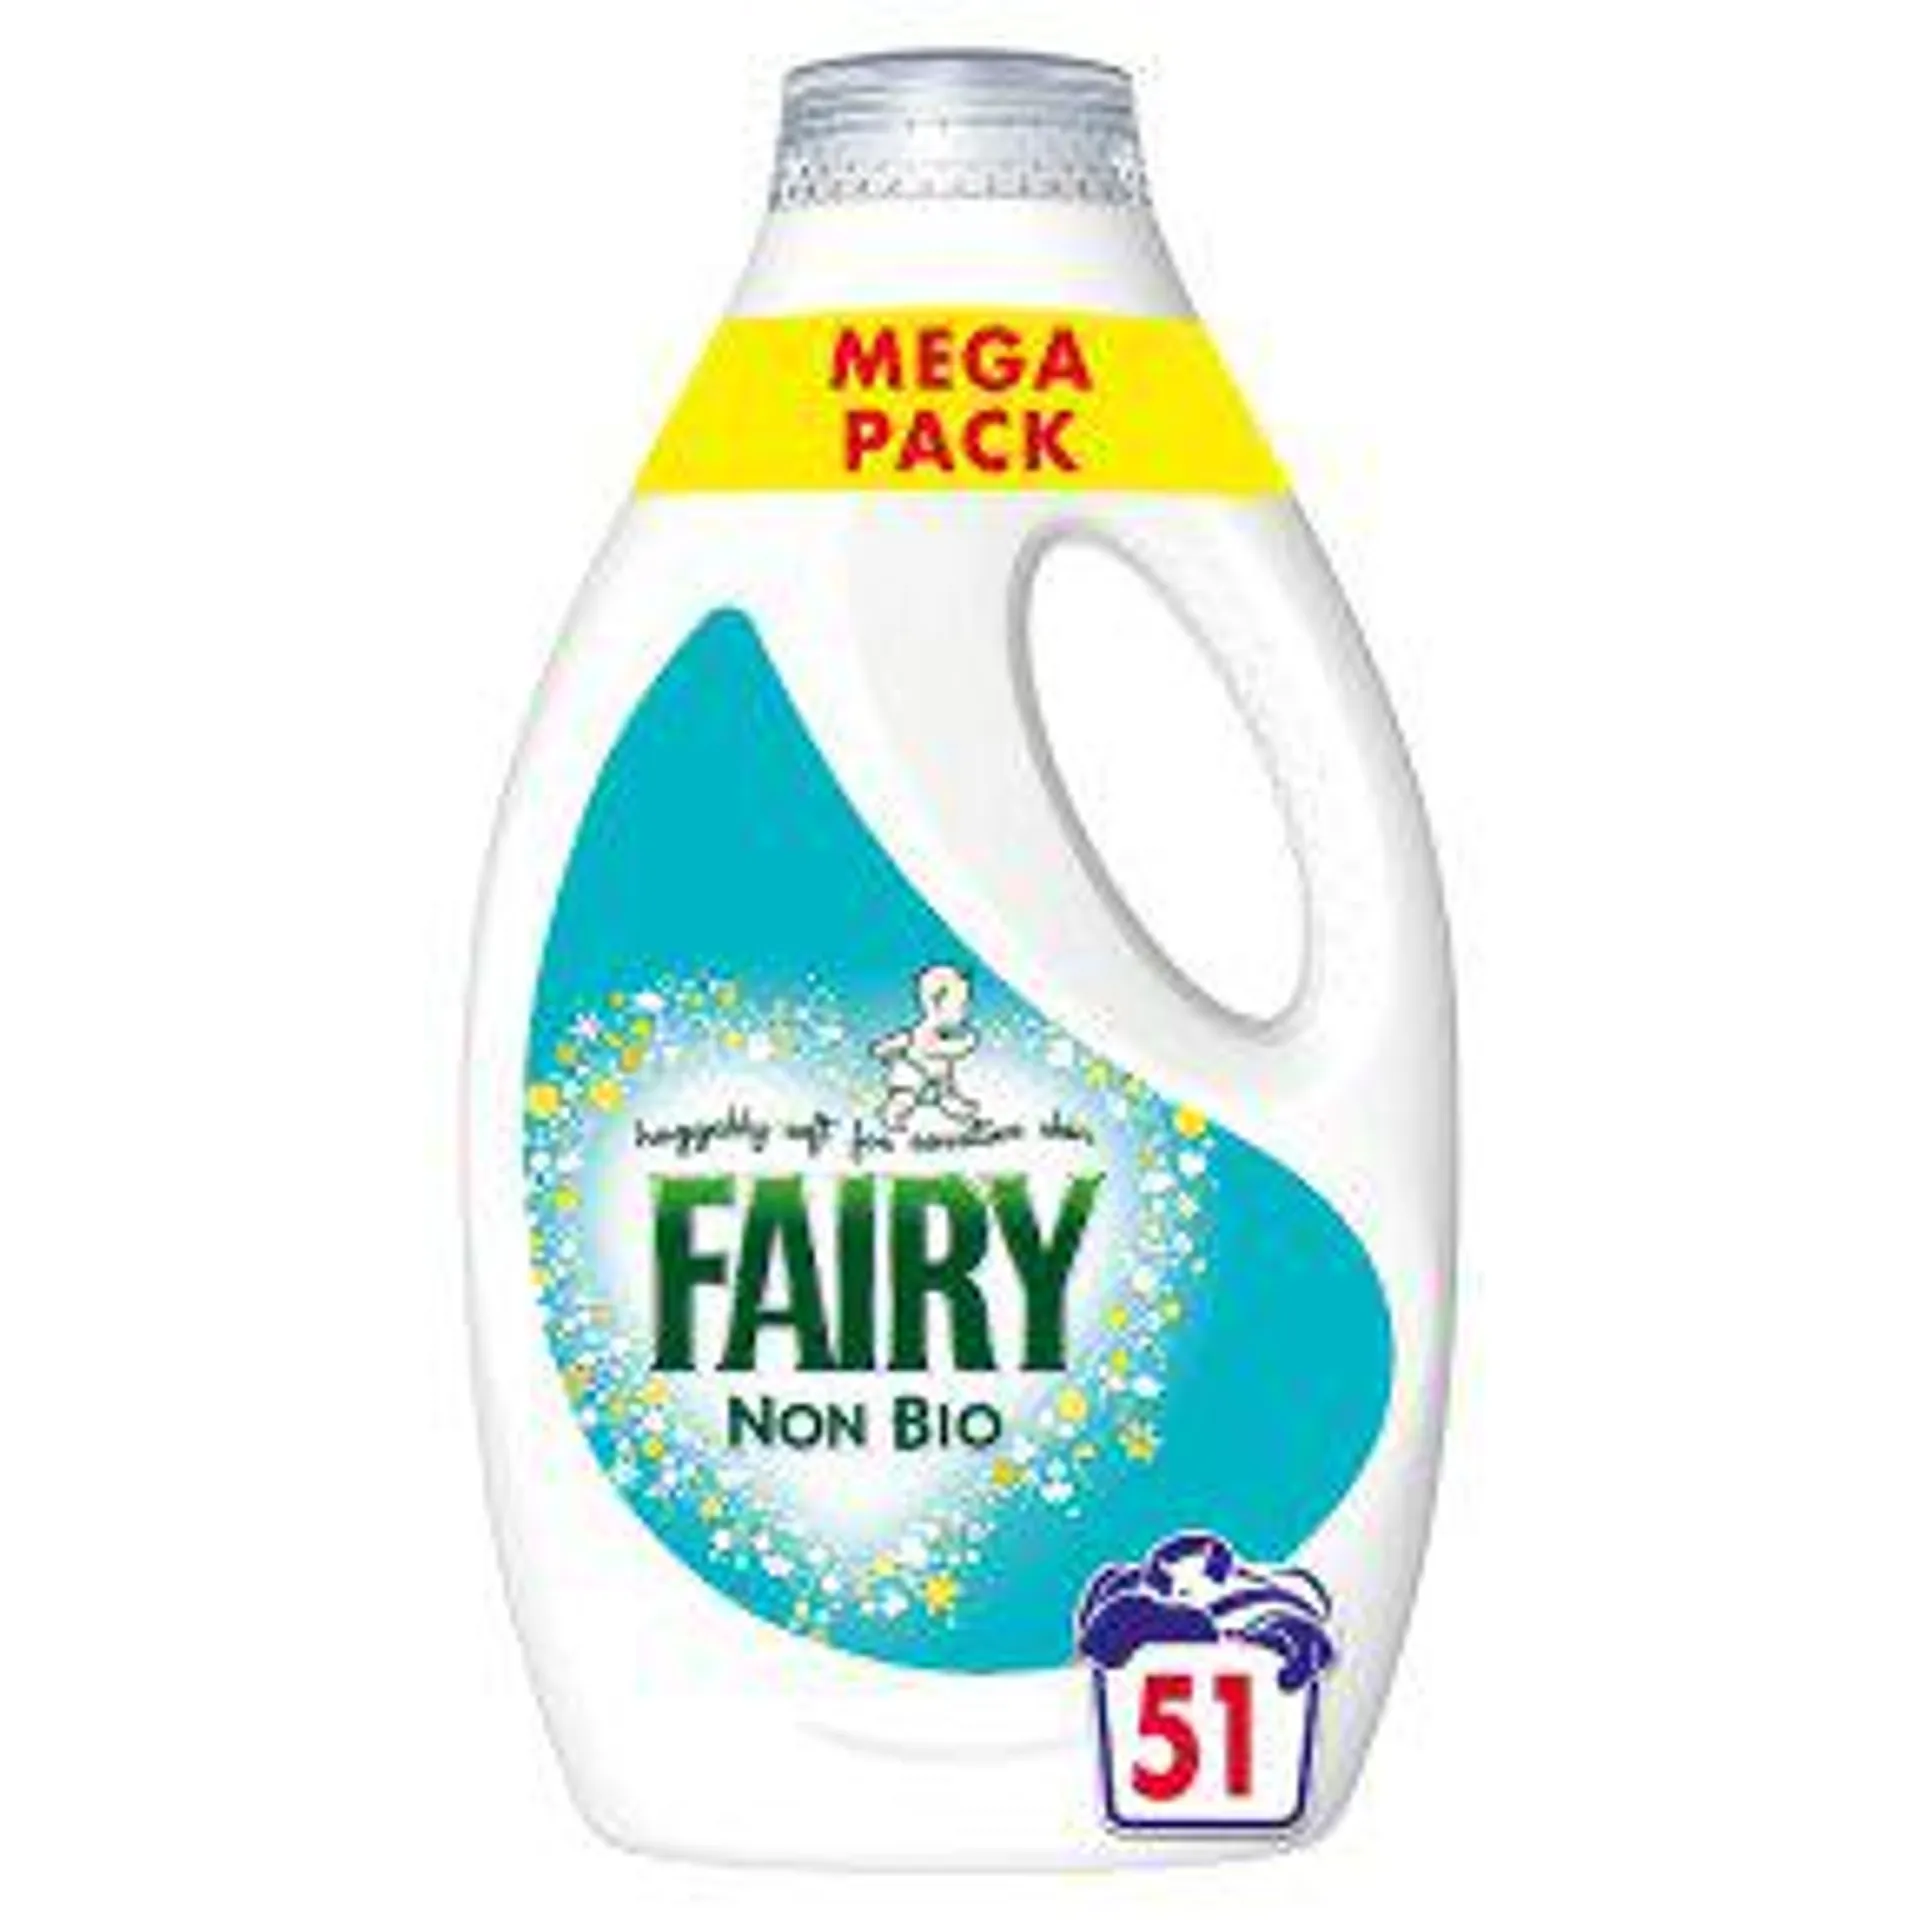 Fairy Non Bio Washing Liquid Large Pack